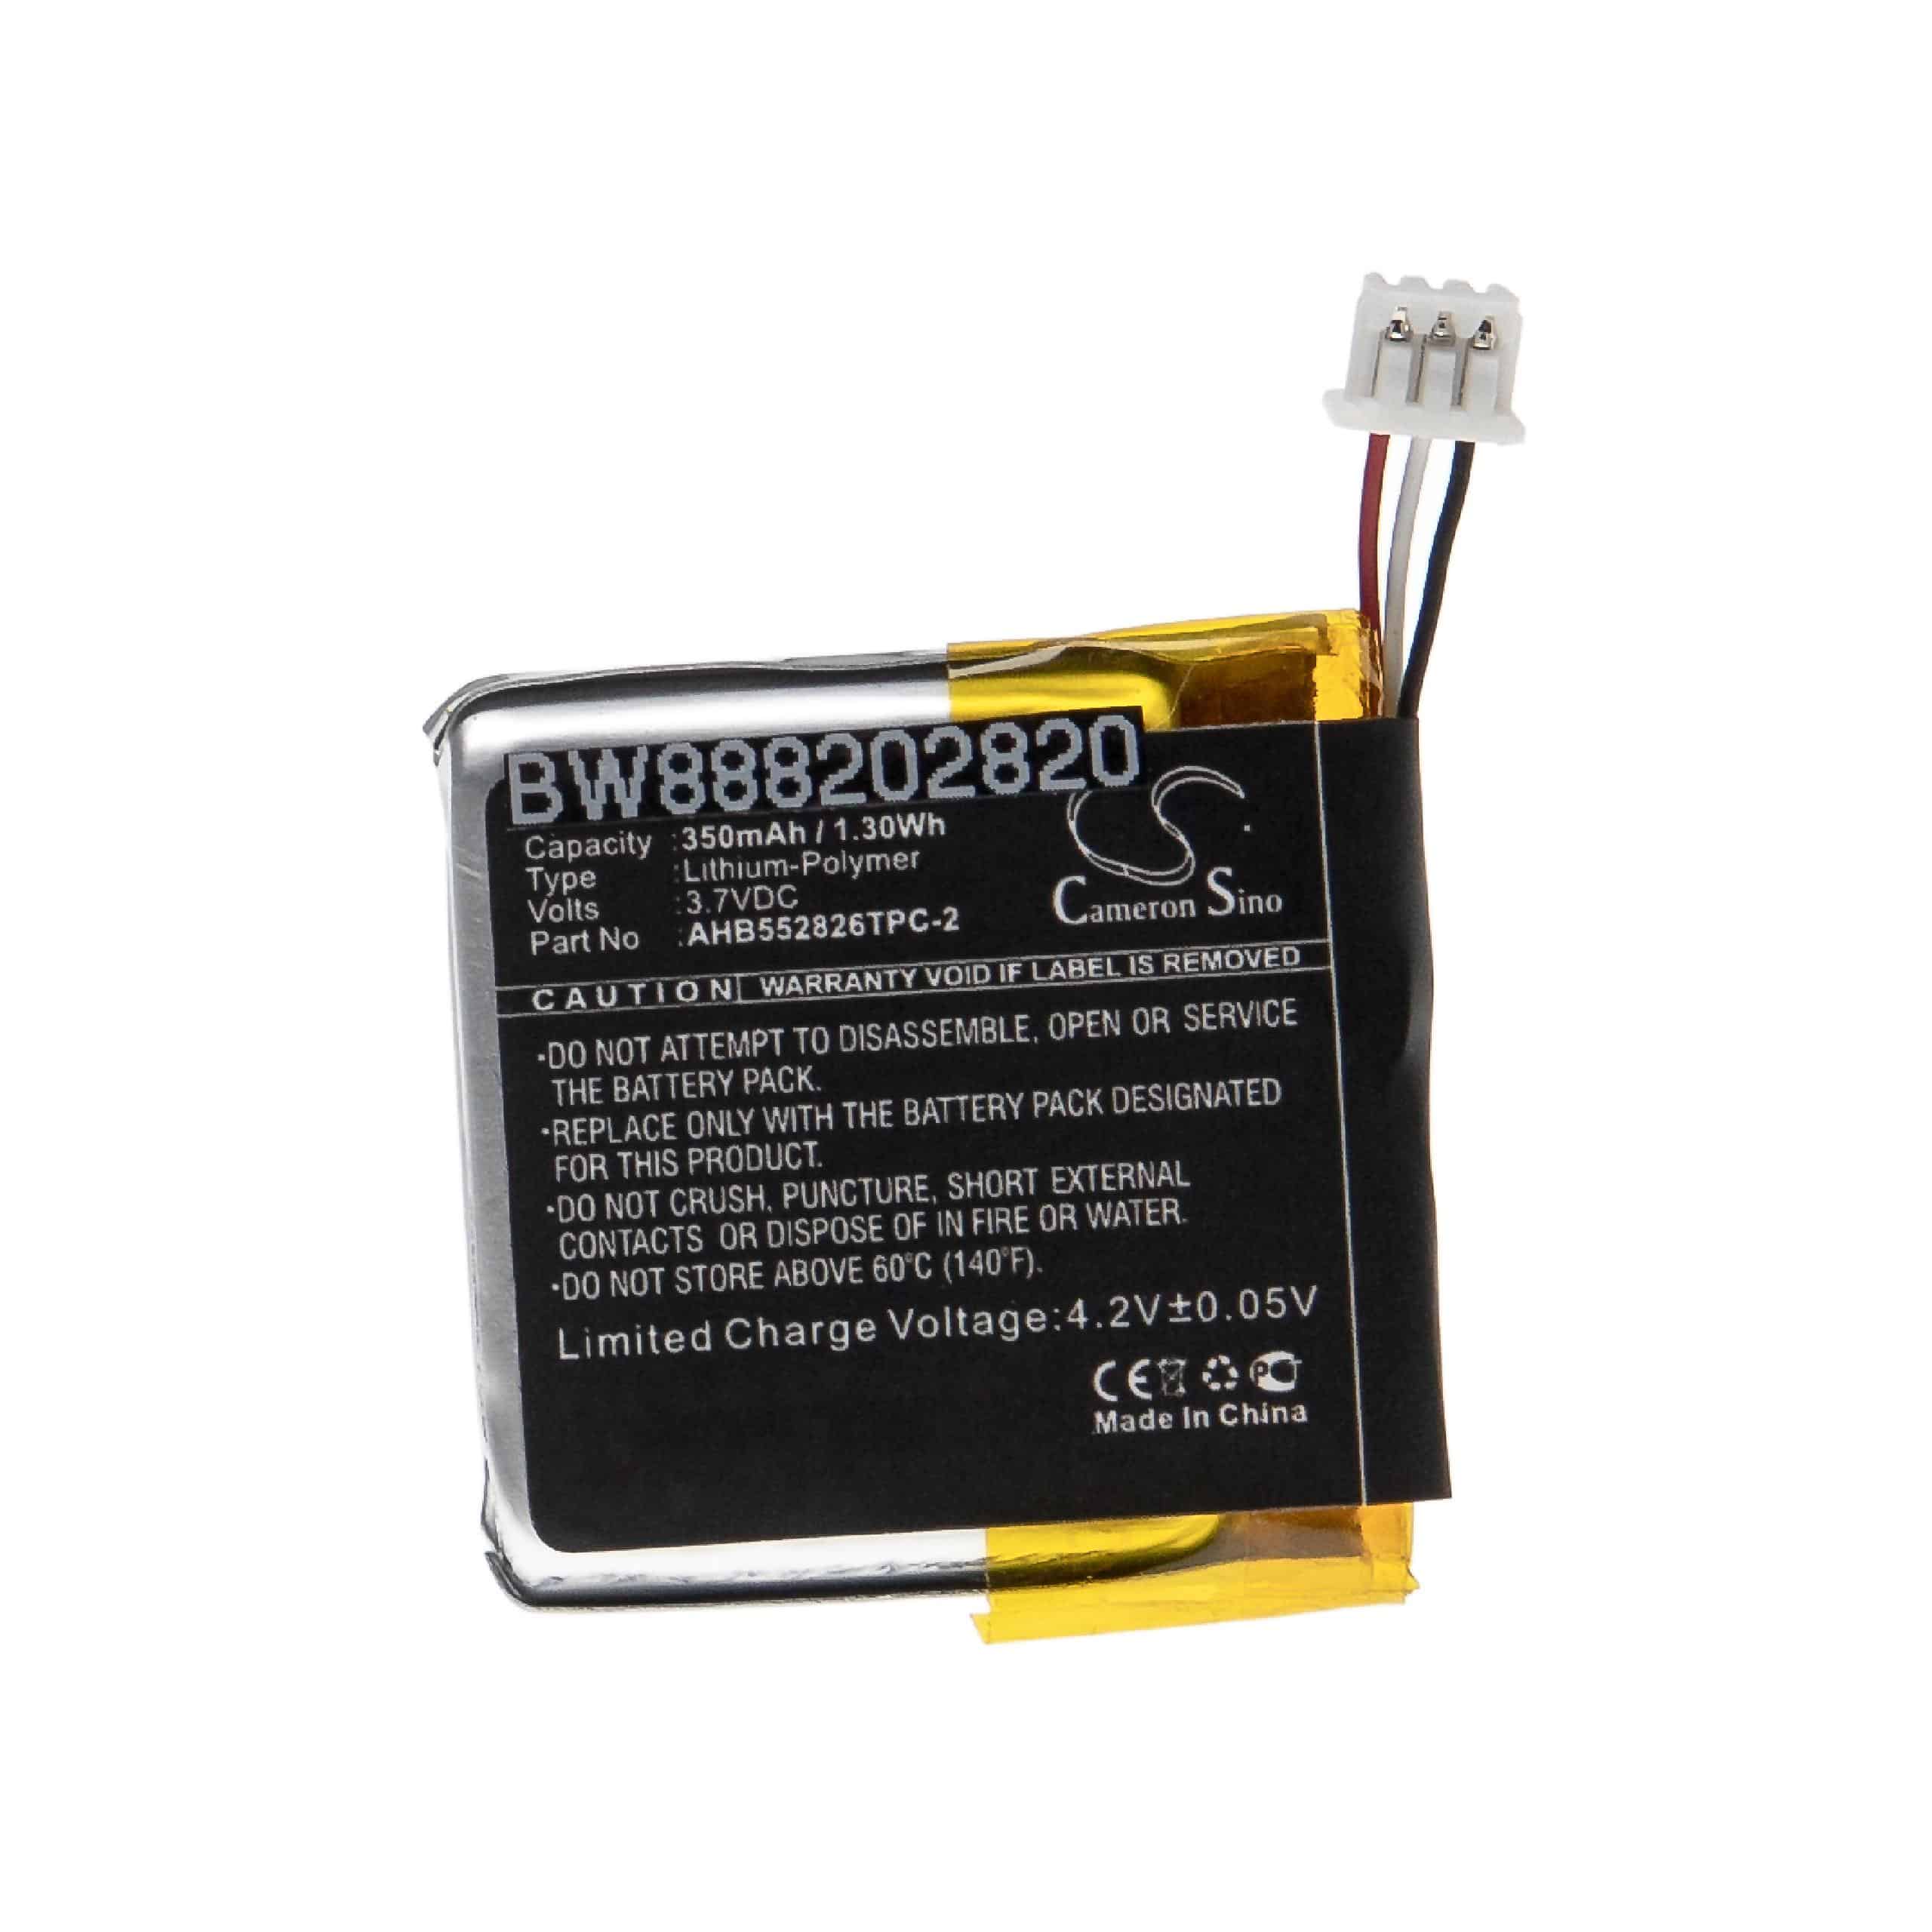 Wireless Headset Battery Replacement for Sennheiser AHB552826TPC-2 - 350mAh 3.7V Li-polymer